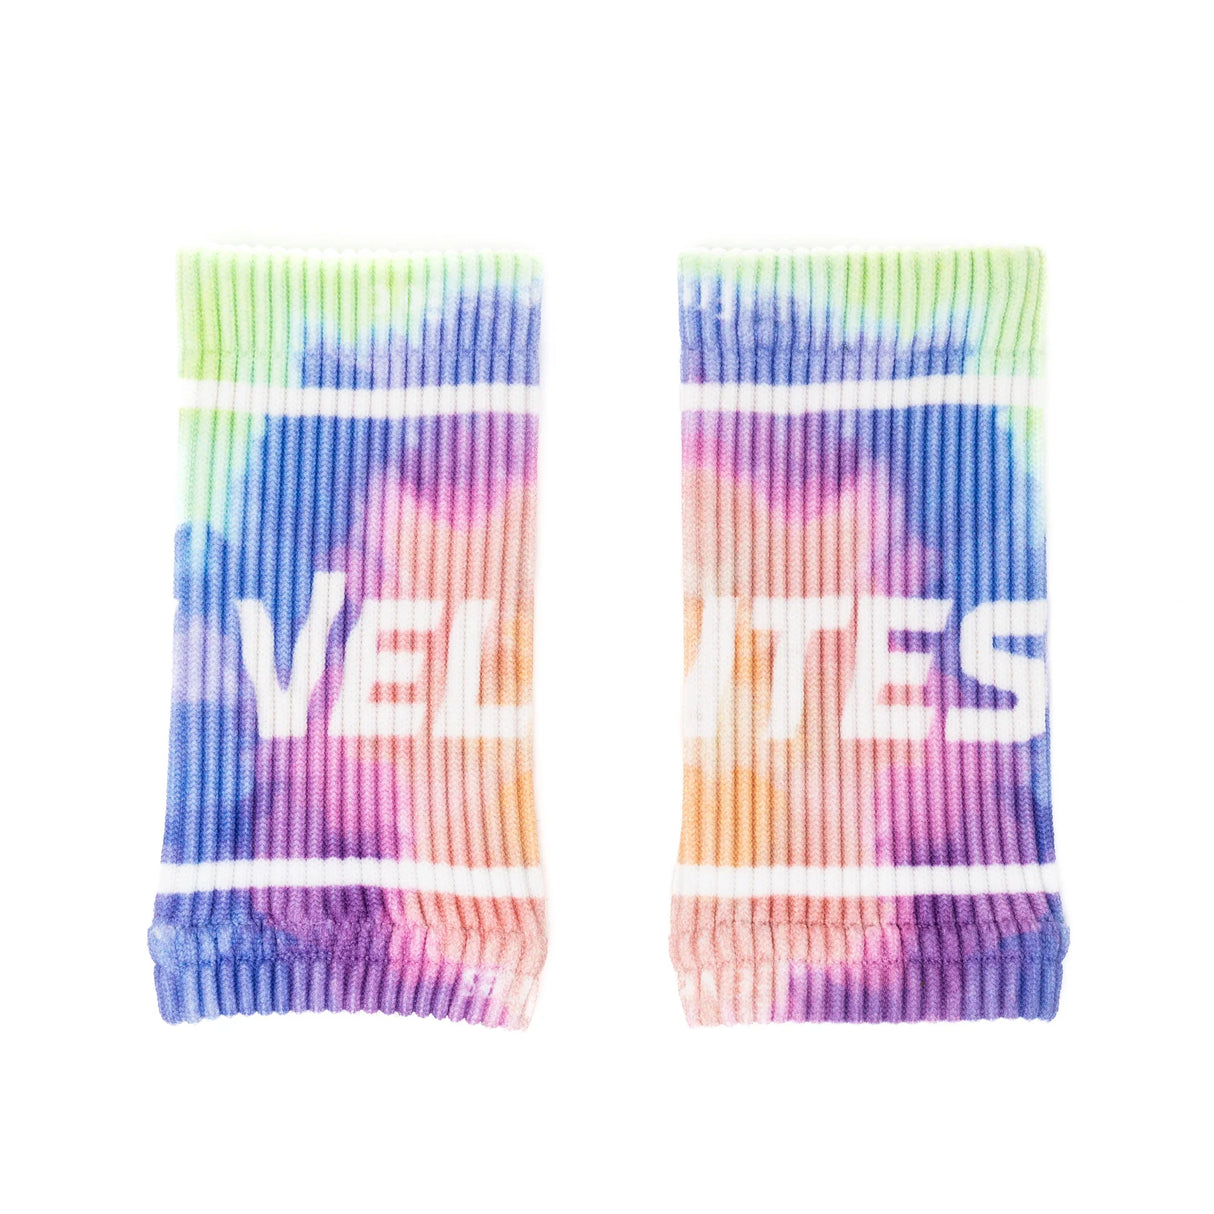 Velites - Colourful Flexible Wrist Bands